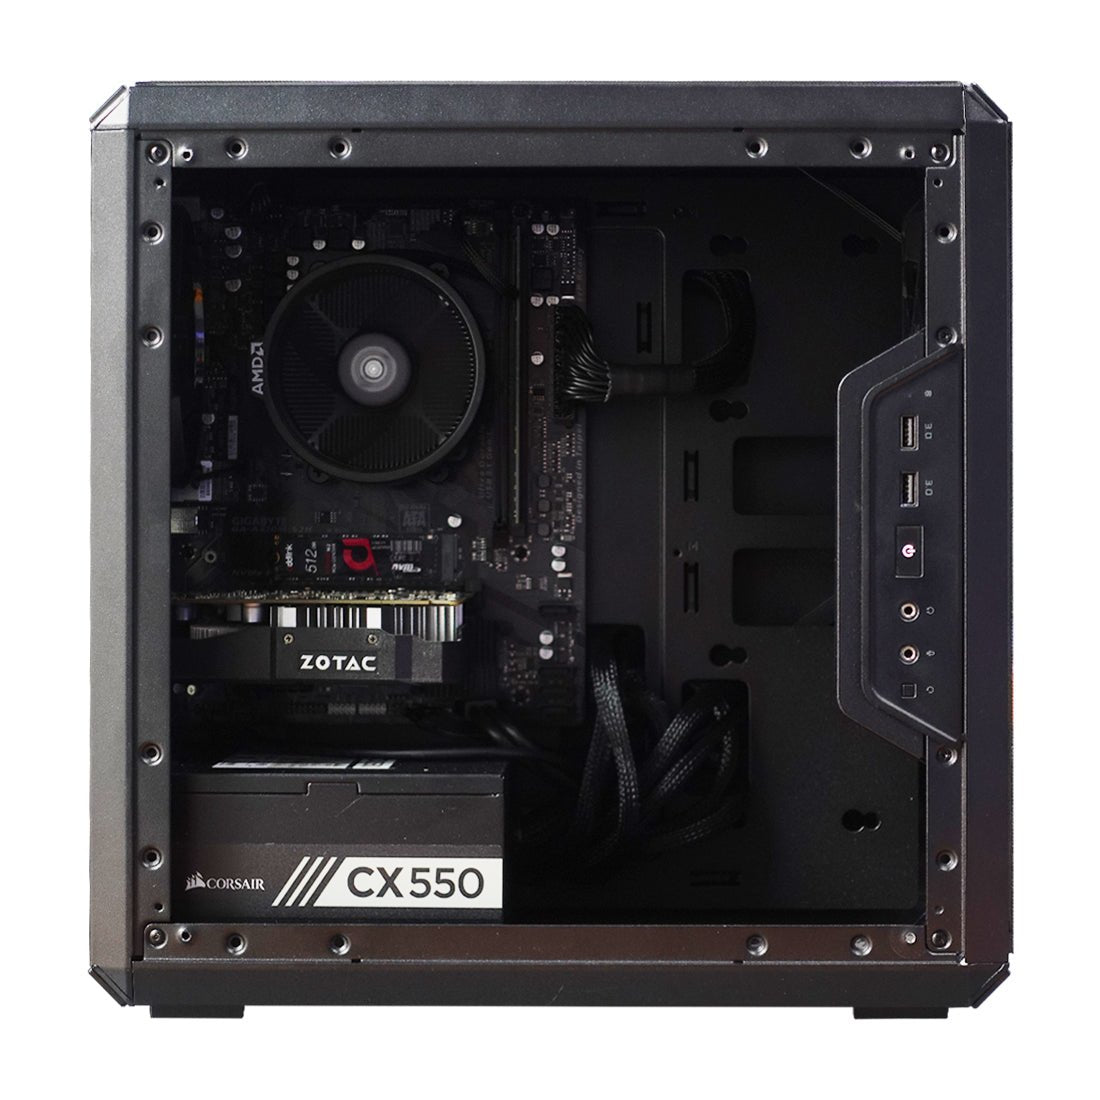 (Pre-Owned) Gaming PC AMD Ryzen 3 2200g w/ Zotac GTX 1050 & CoolerMaster Master box Q300L - Black - كمبيوتر مستعمل - Store 974 | ستور ٩٧٤